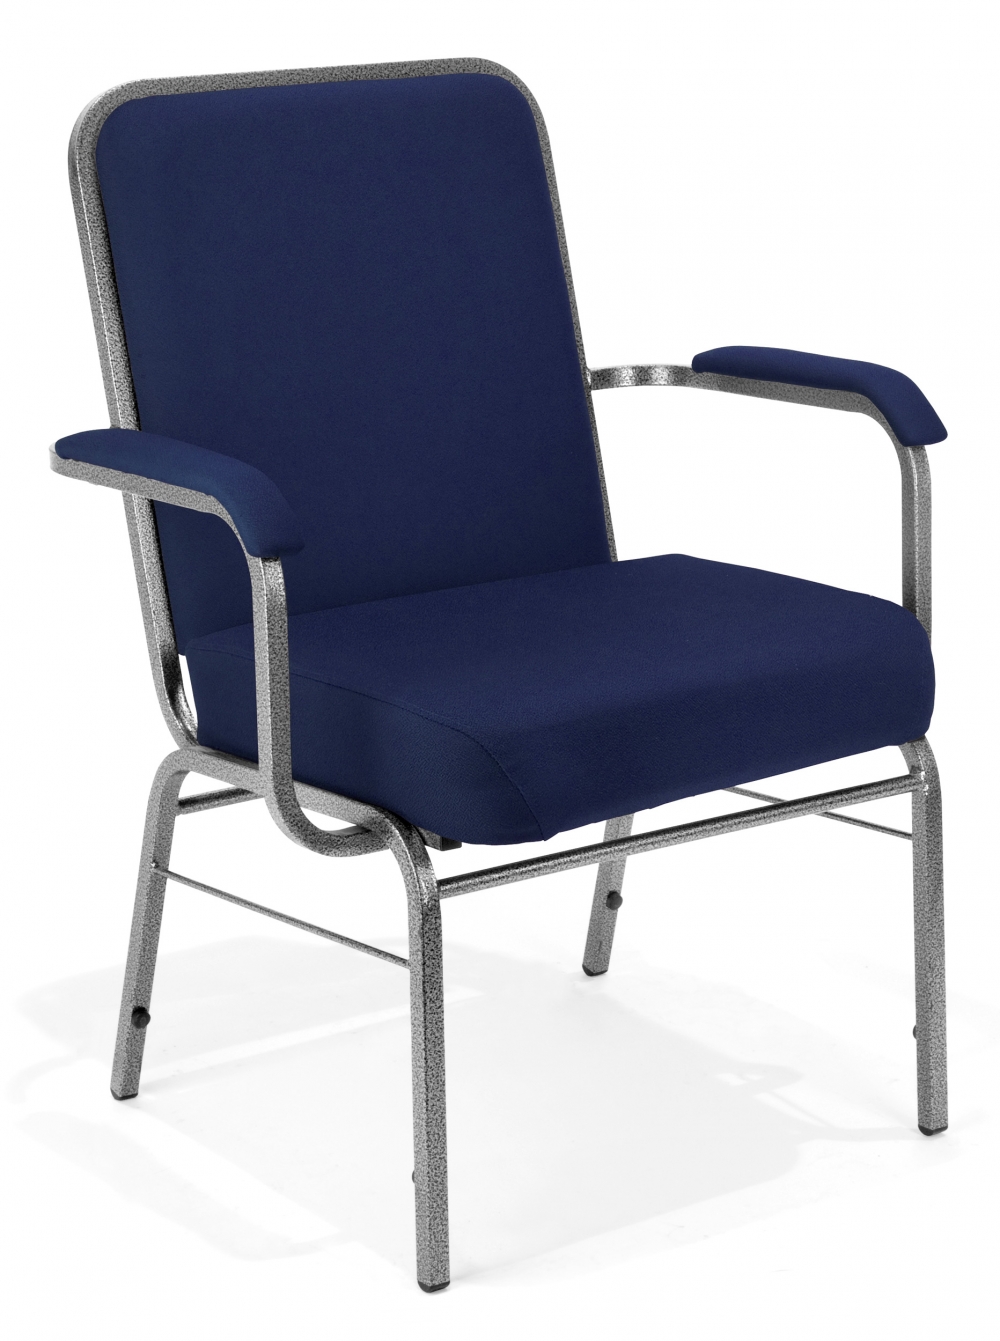 500 lb capacity office chair cub 300 xl 804 navy mfo